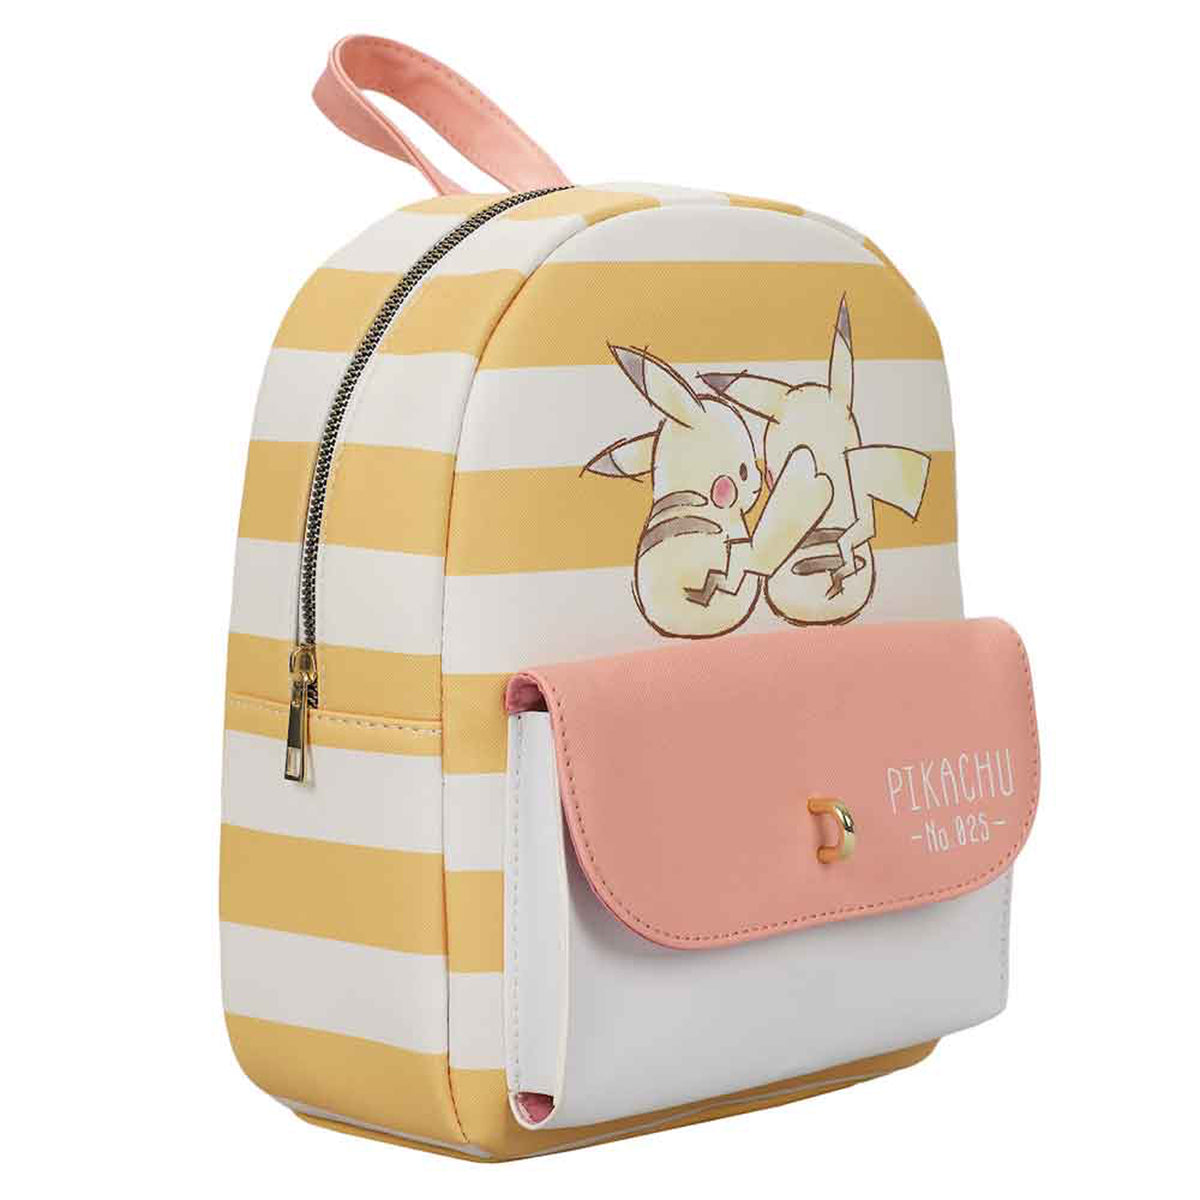 Pokemon Pikachu Mini Backpack